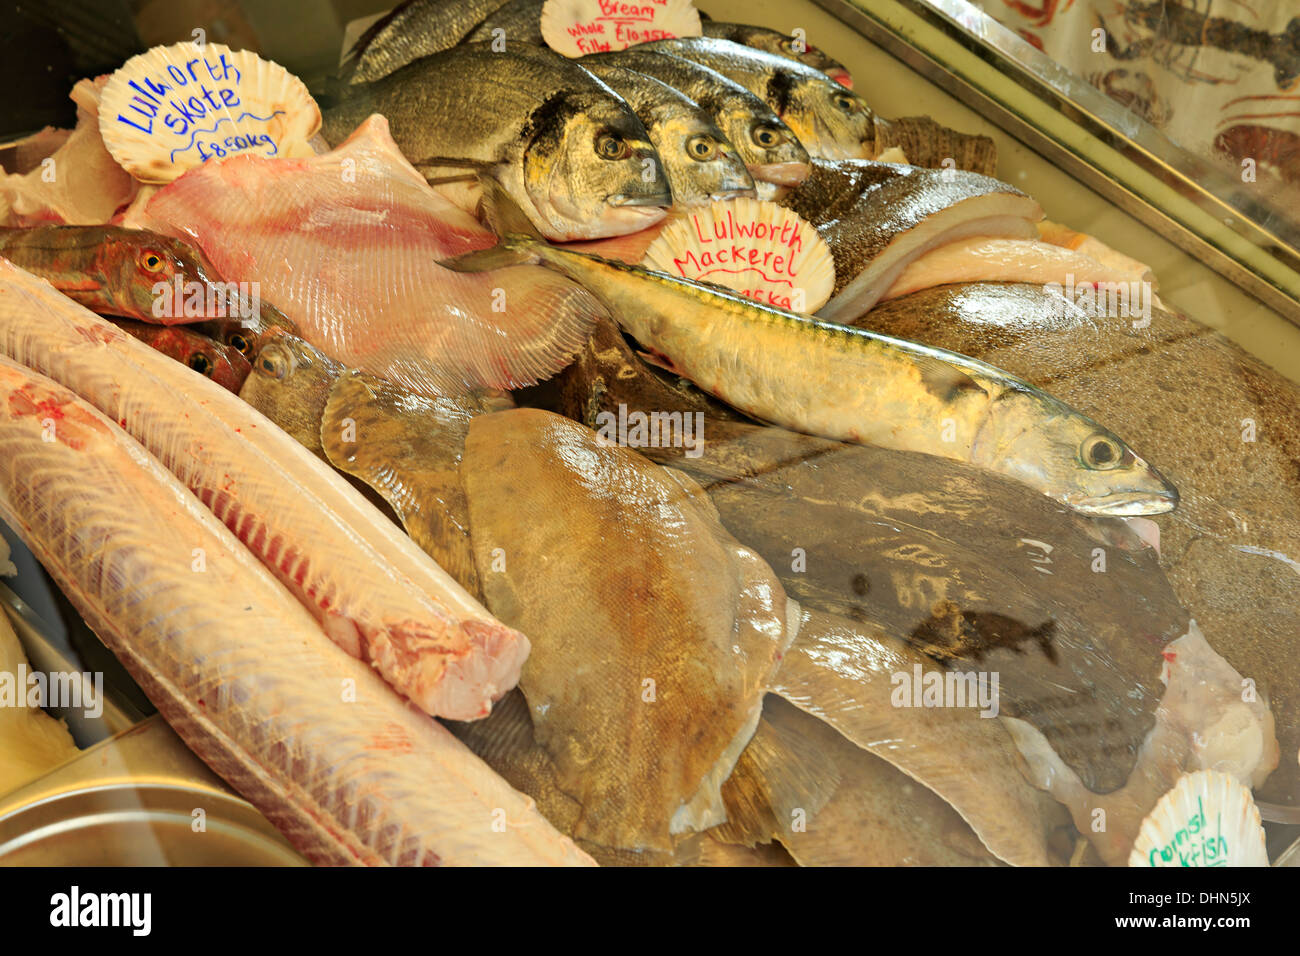 Fresh fish on display in a fishmonger's window in Lulworth Cove, Dorset Stock Photo